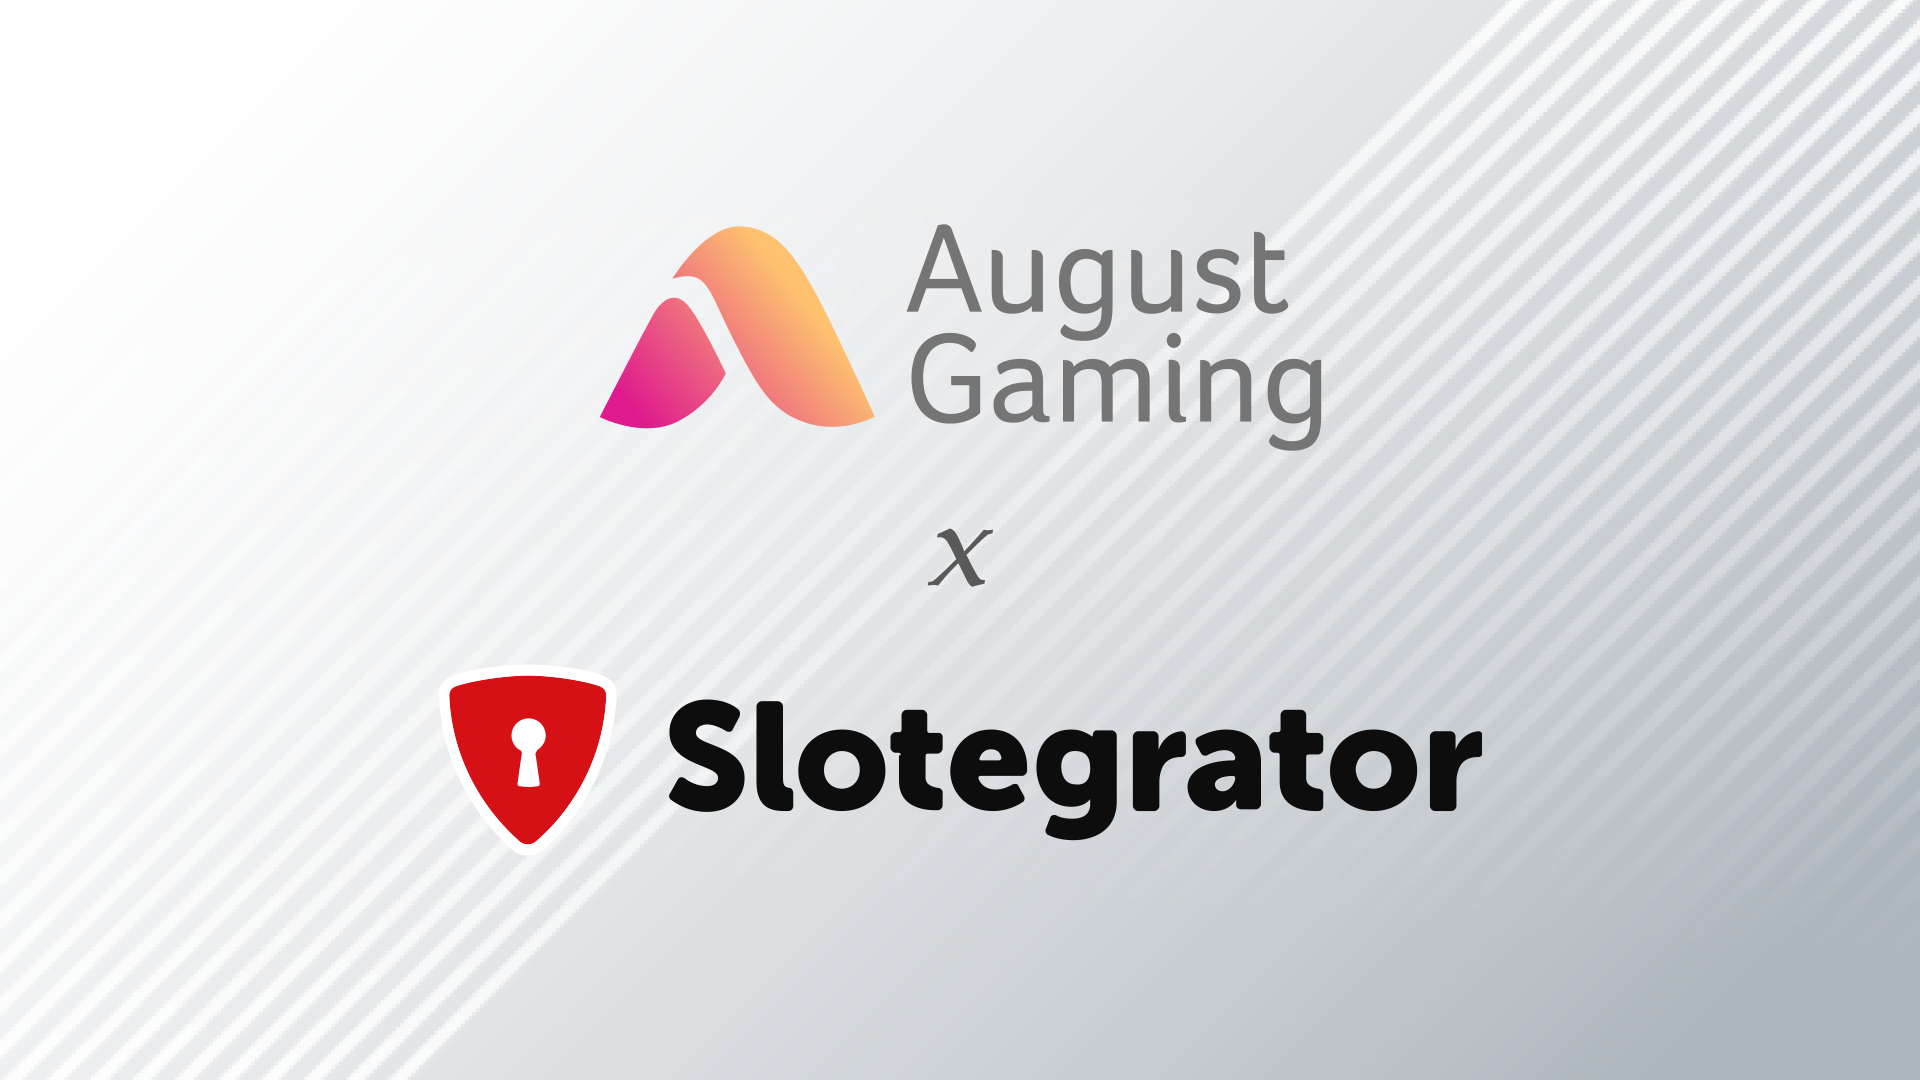 August Gaming ประกาศความร่วมมือกับ Slotegrator